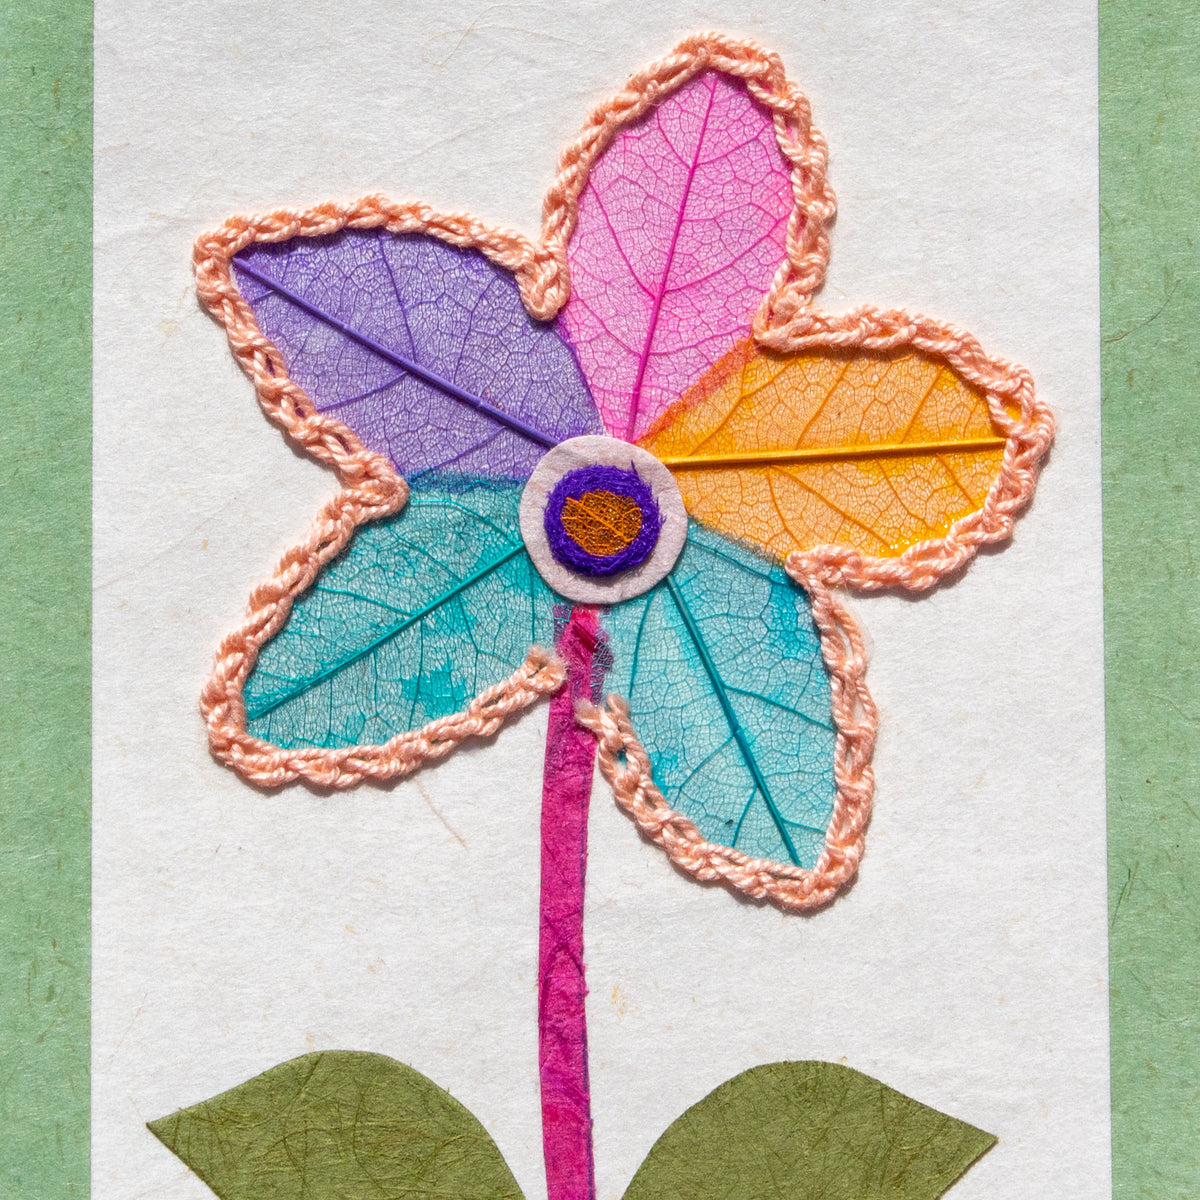 Handmade Greetings Card - Colourful Flower